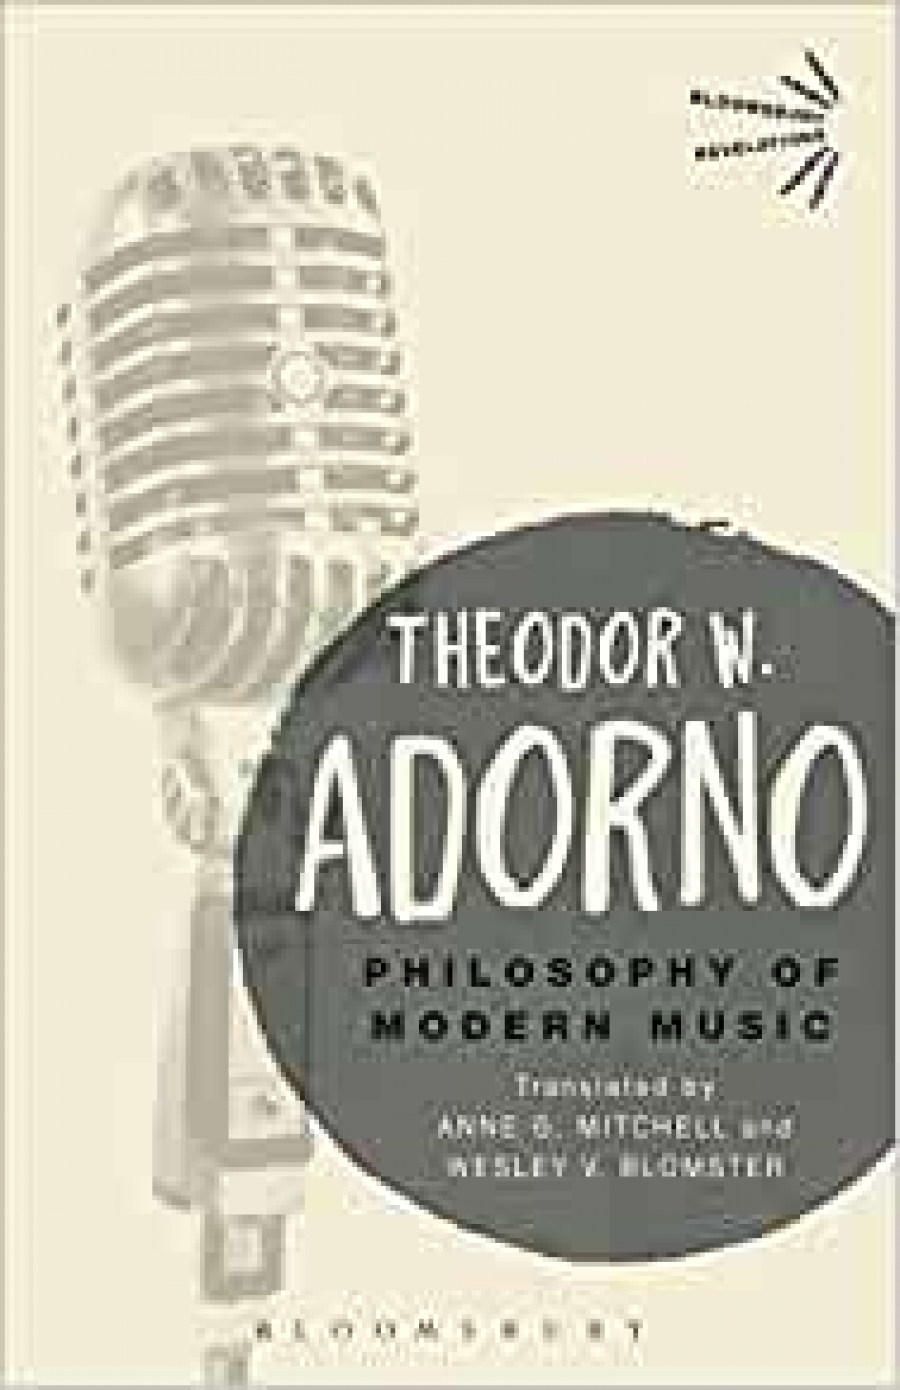 Adorno,Theodor W. Philosophy of Modern Music 